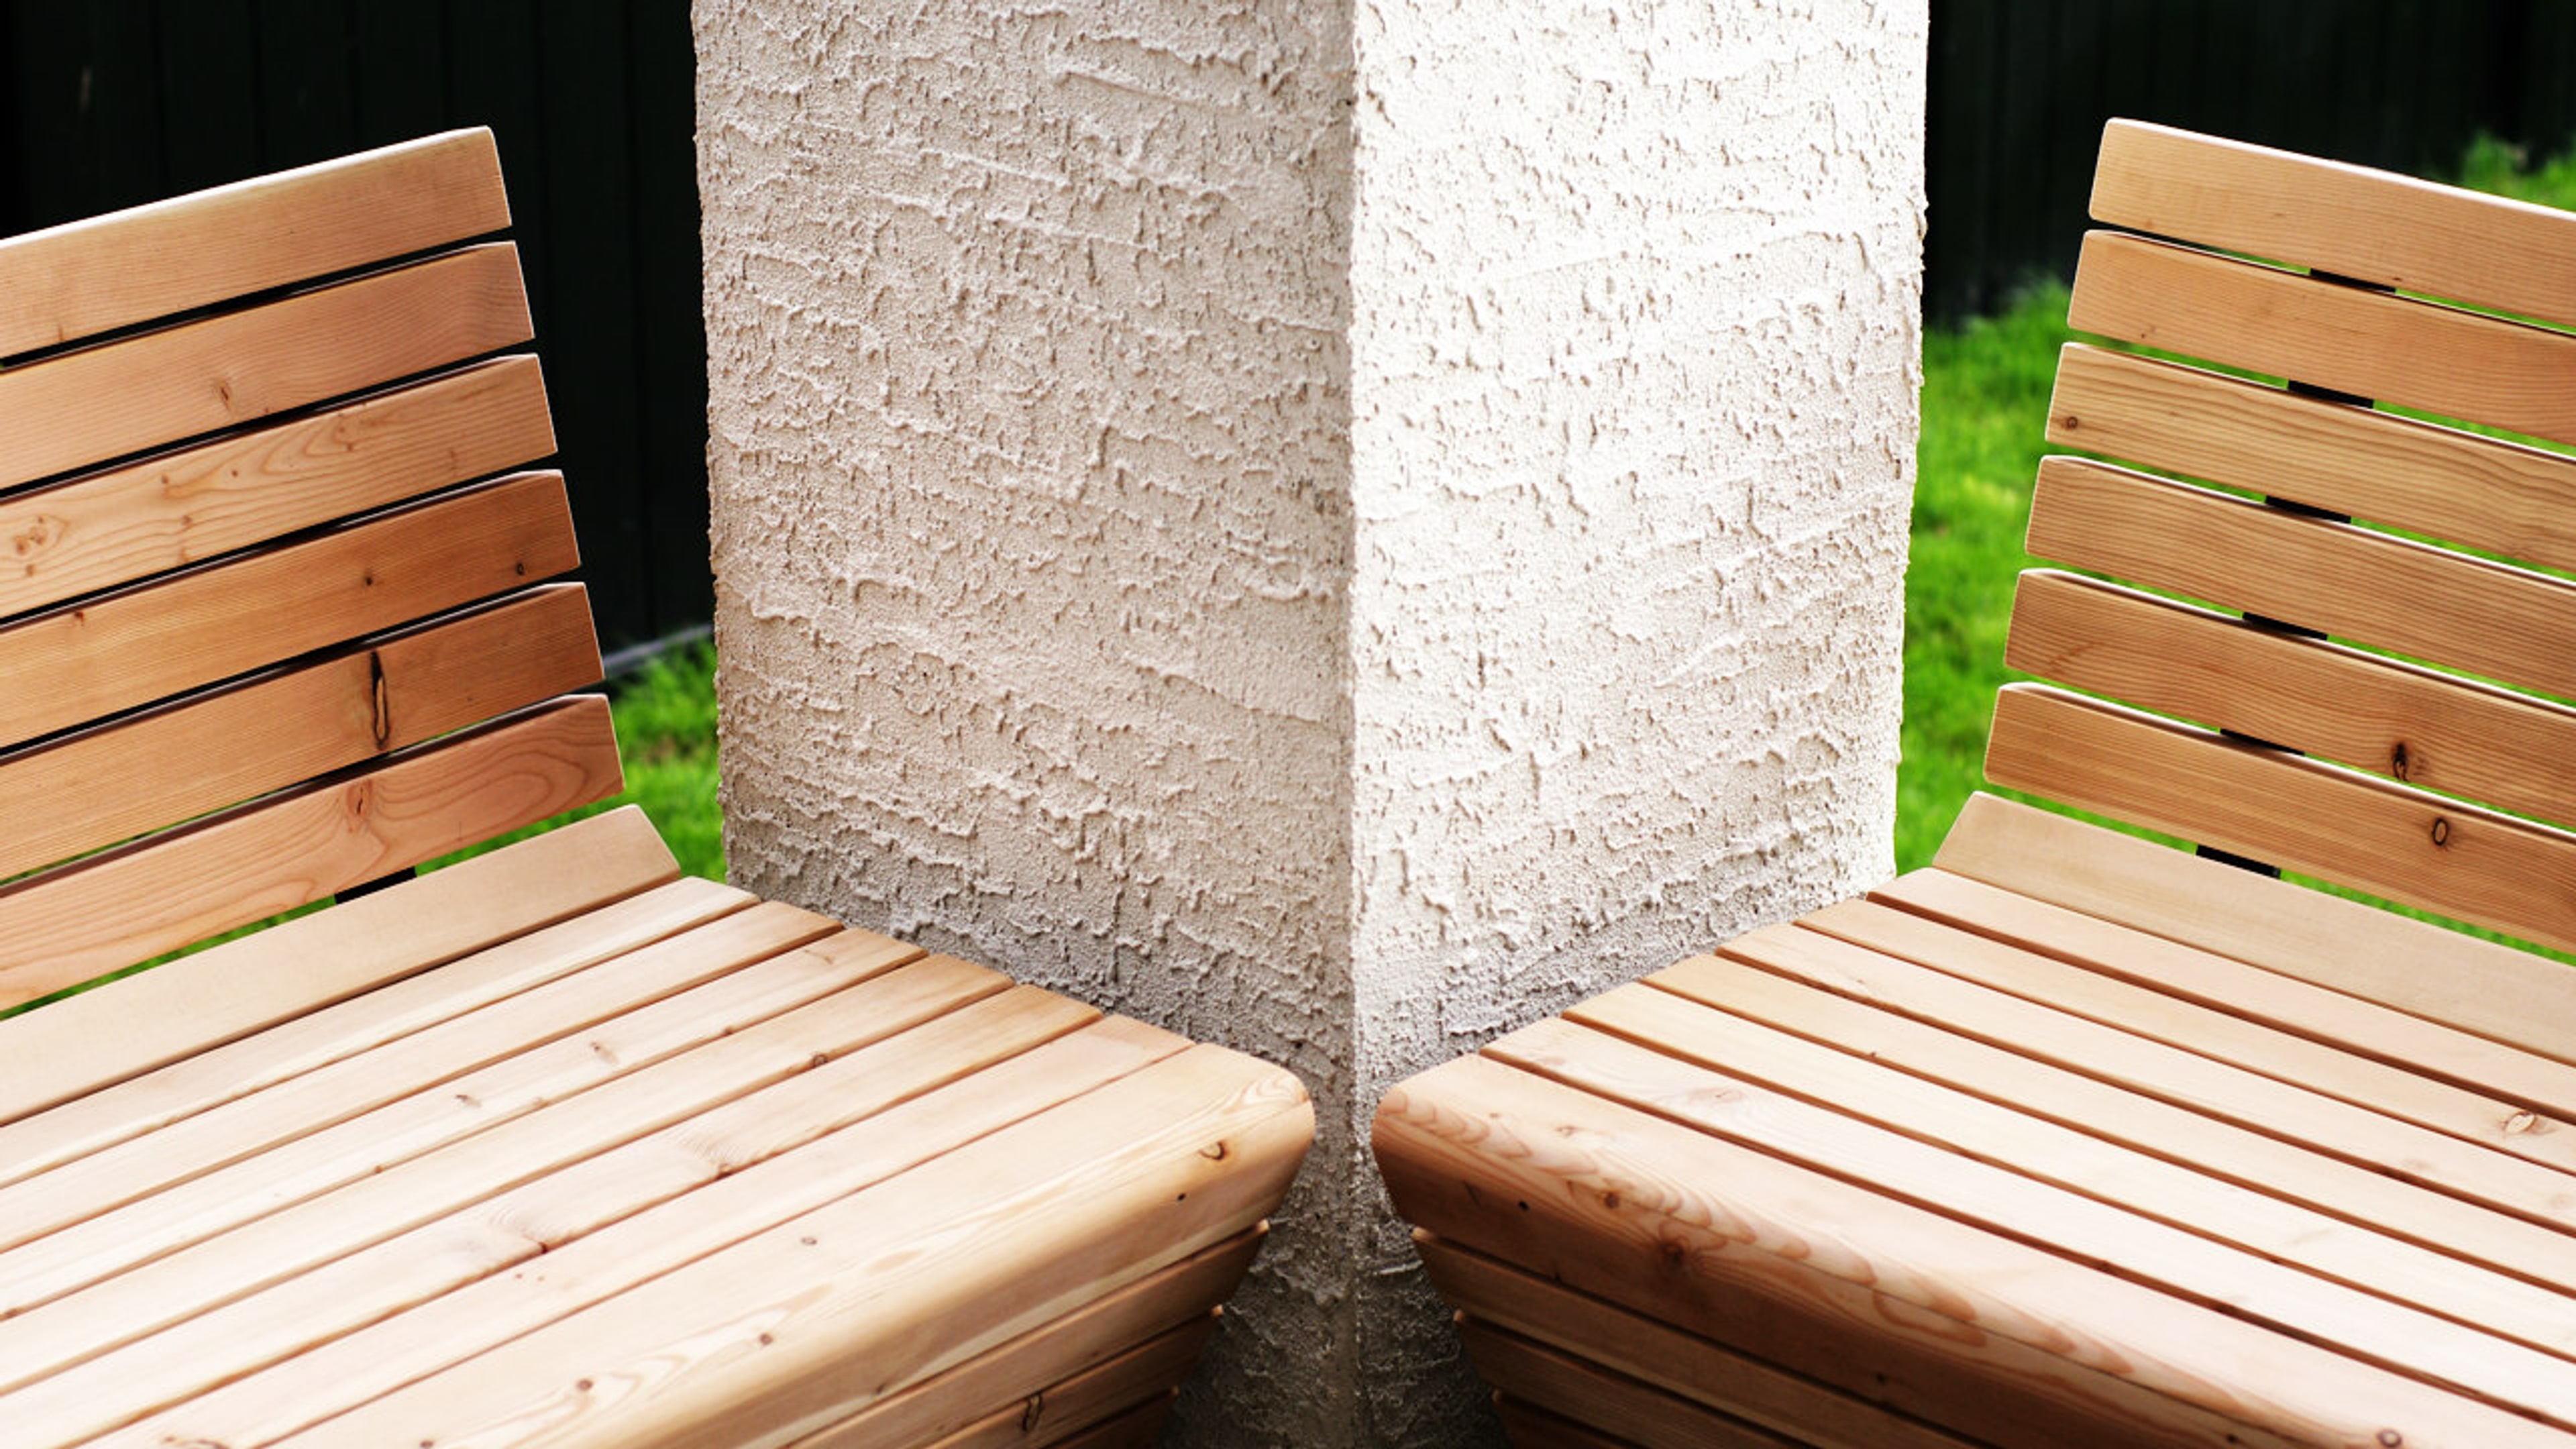 Claywork Design & Construction: Fir Benches